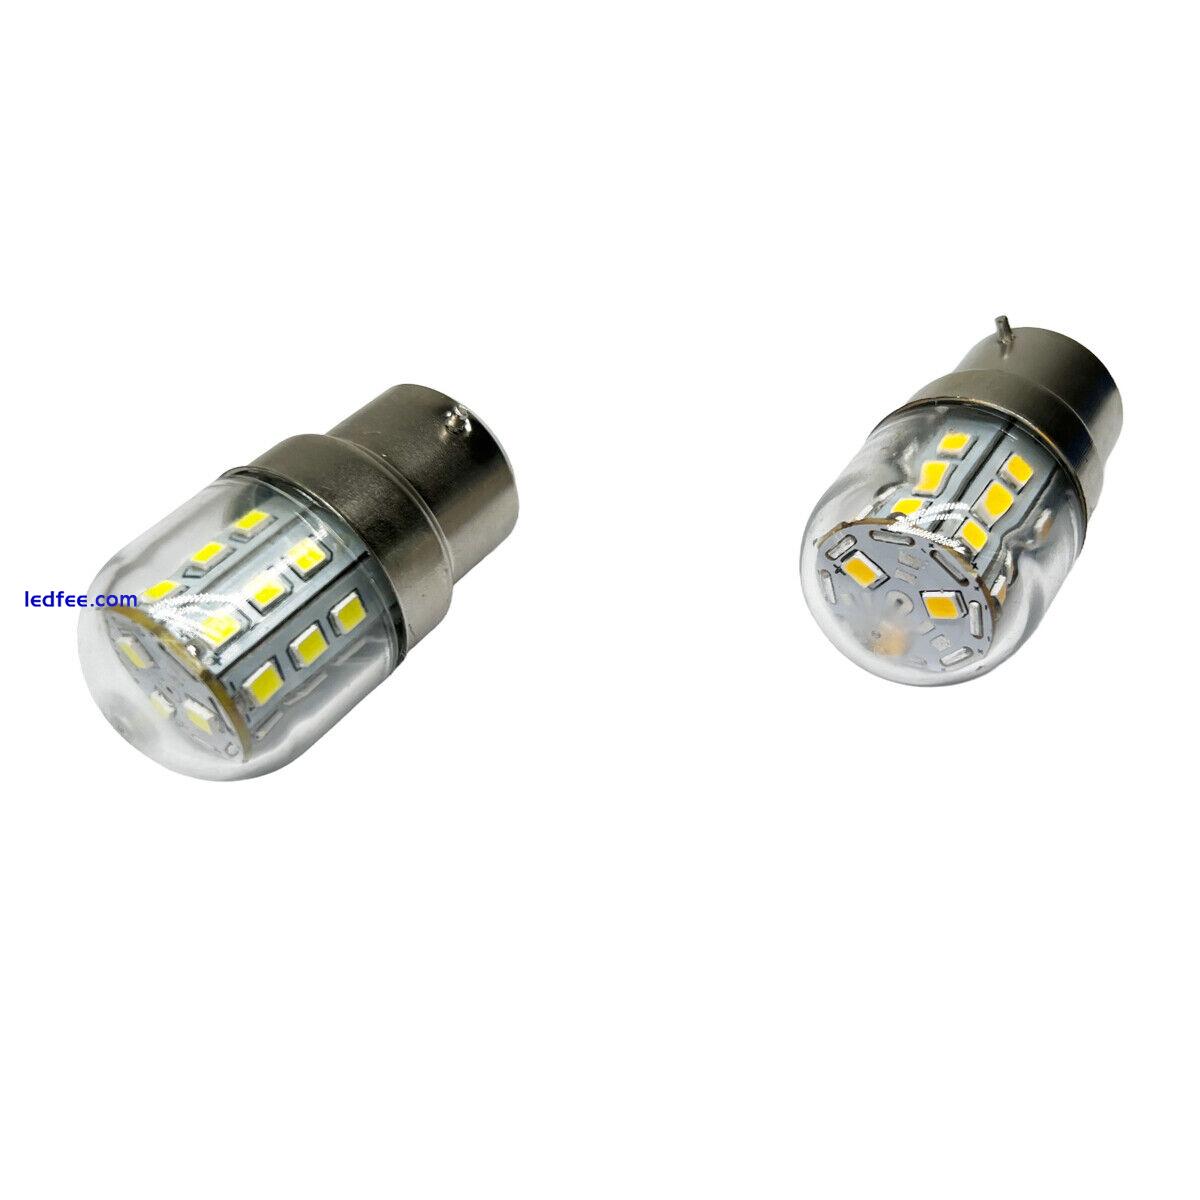 Mini B22 LED Corn Light Bulbs 4W T26 2835 SMD Lamp Refrigerator Kitchen Decor BC 5 